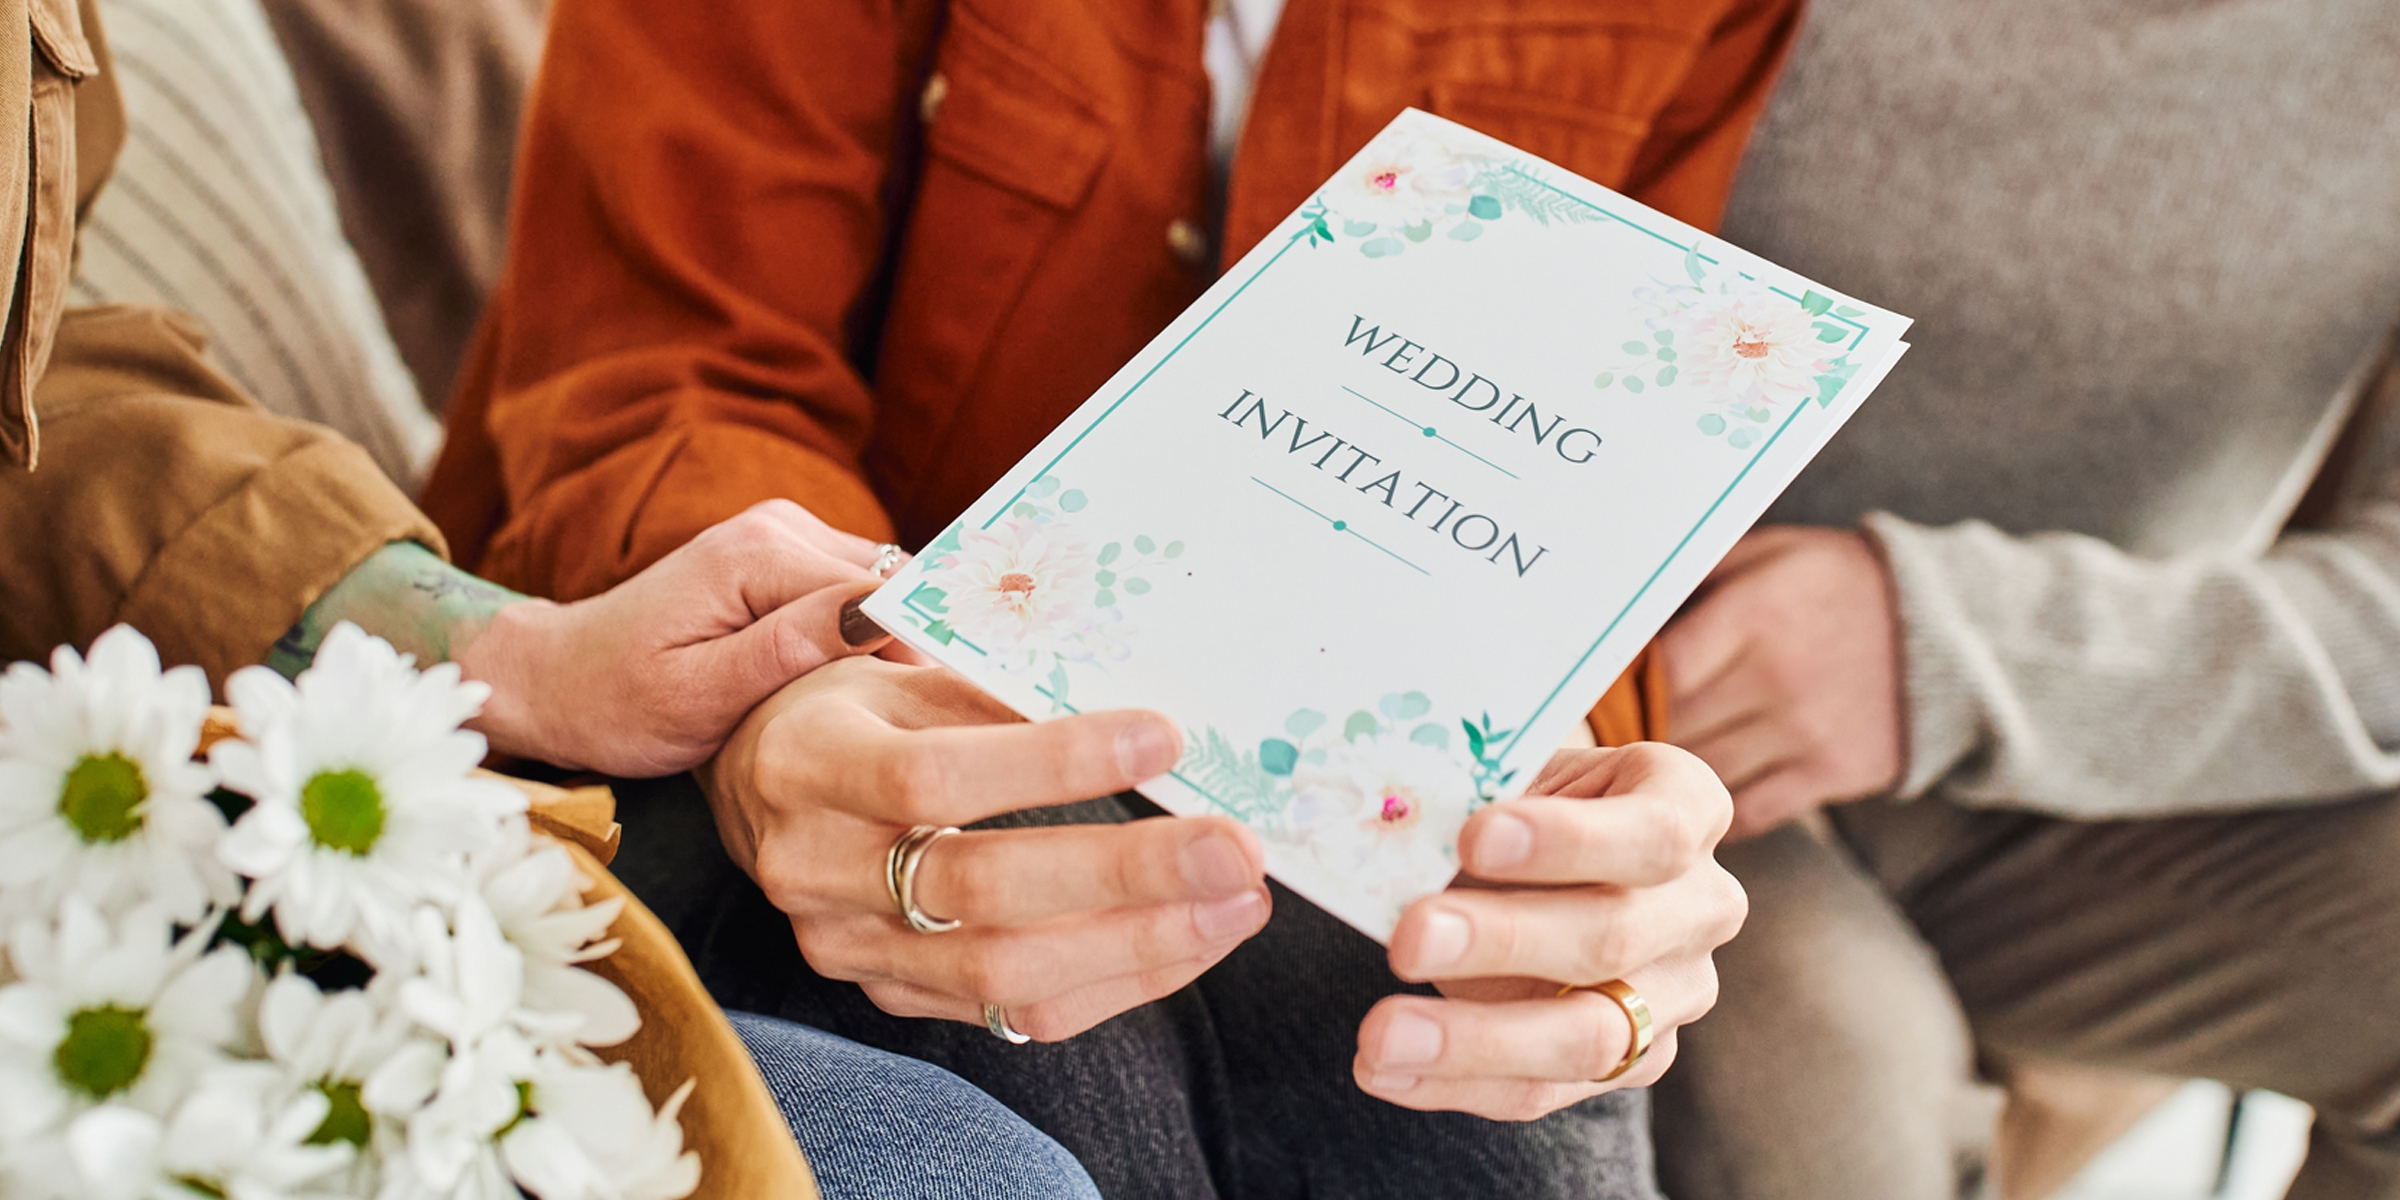 Hands holding a wedding invitation | Source: Shutterstock